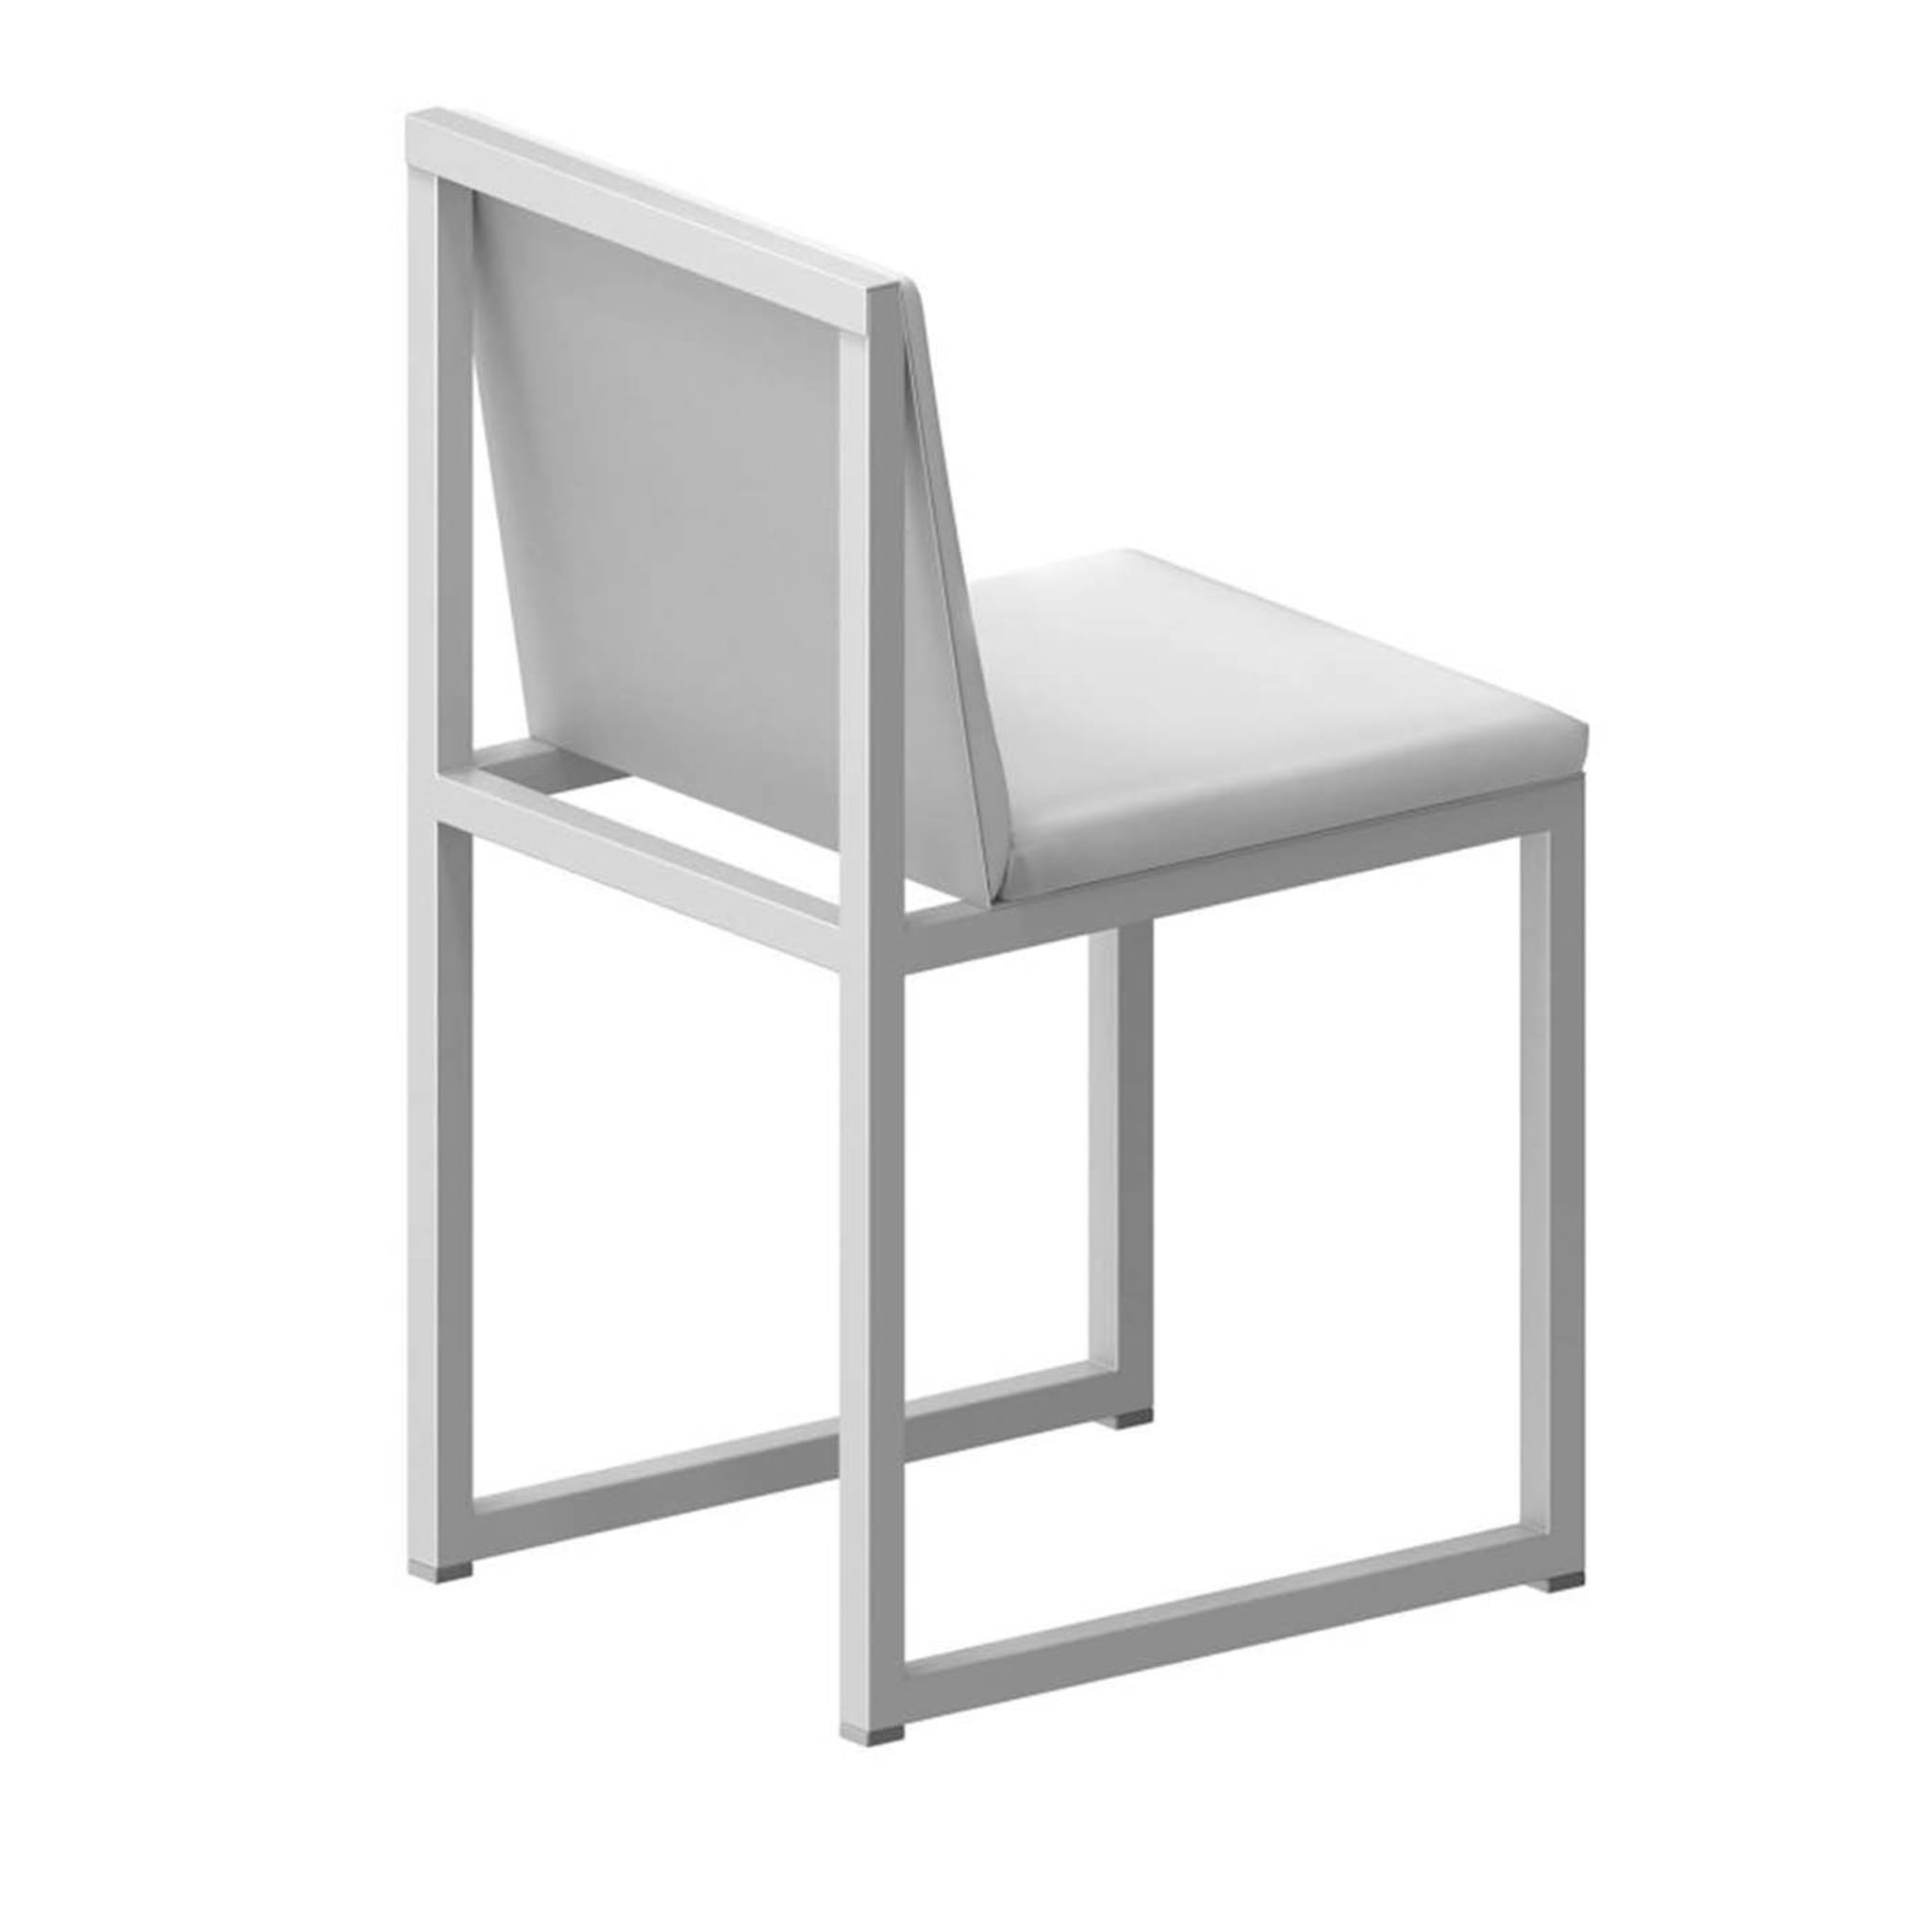 Teresa Soft Set of 2 Chairs by Maurizio Peregalli - Main view